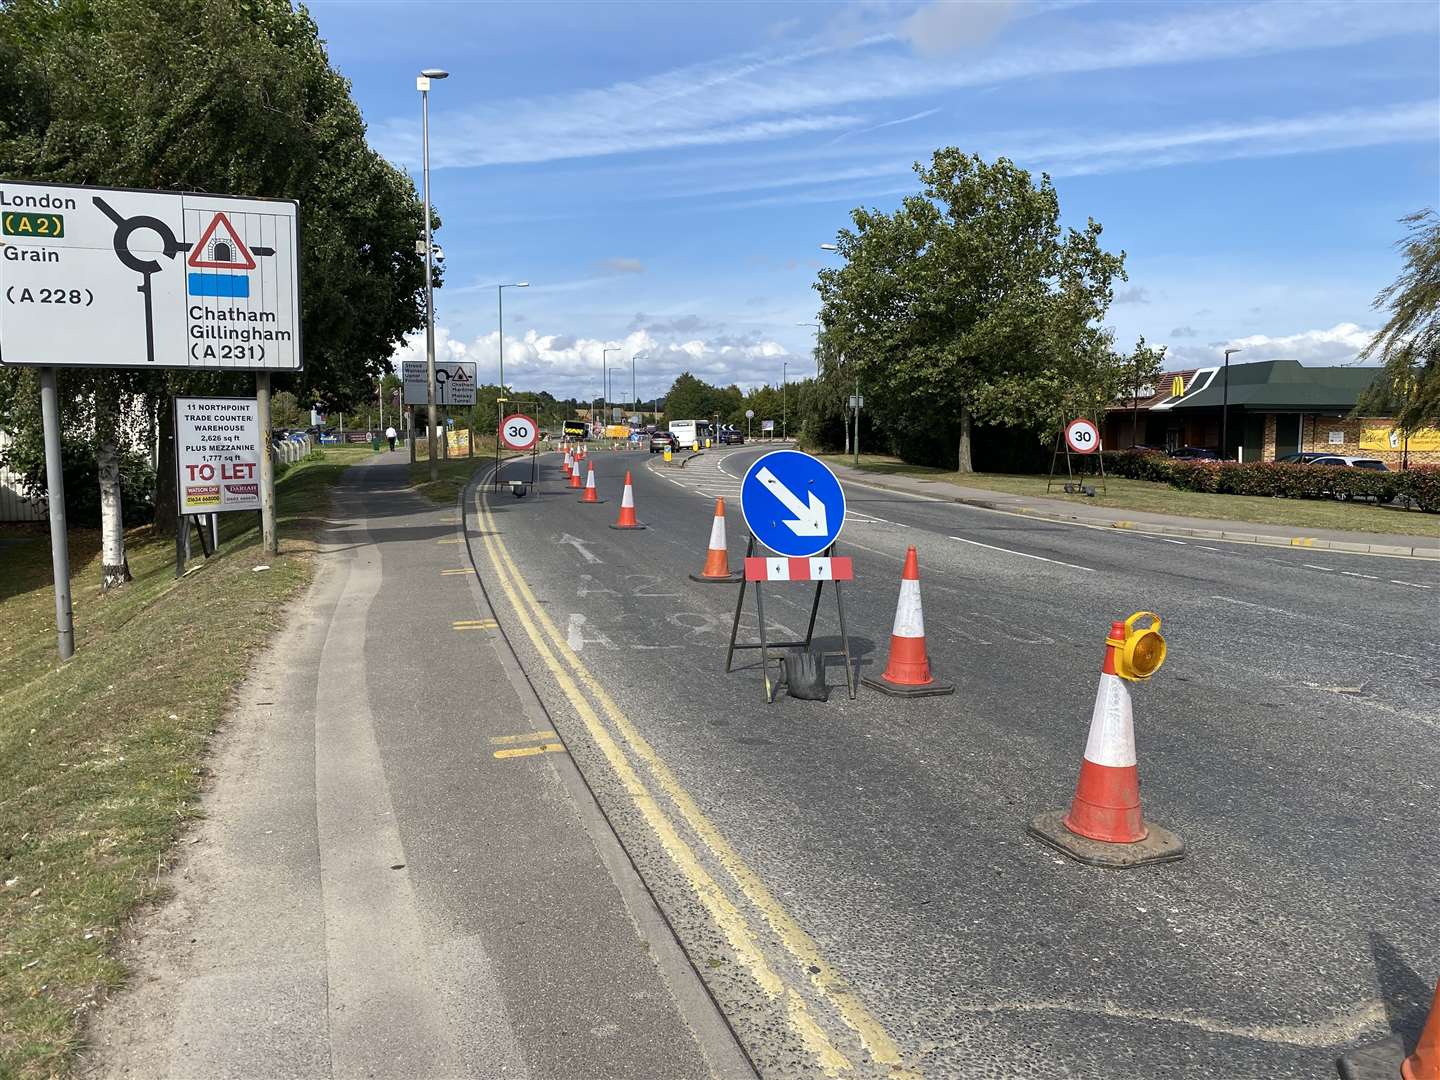 Roadworks to create a sliproad began in September 2021